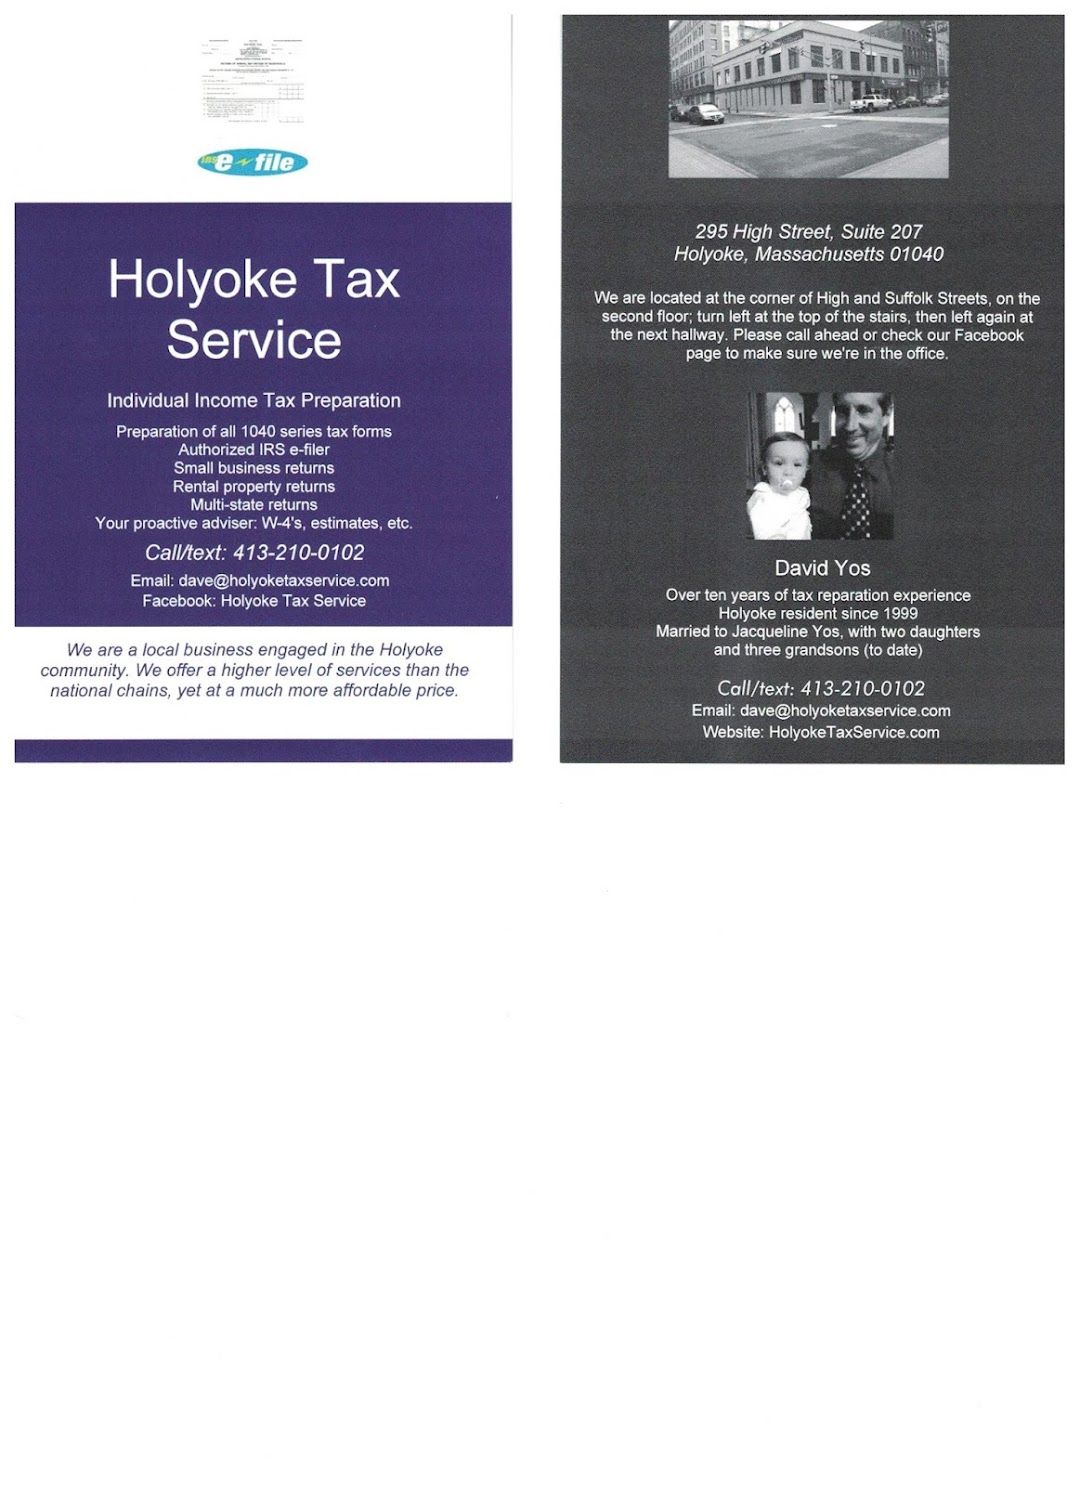 Holyoke Tax Service